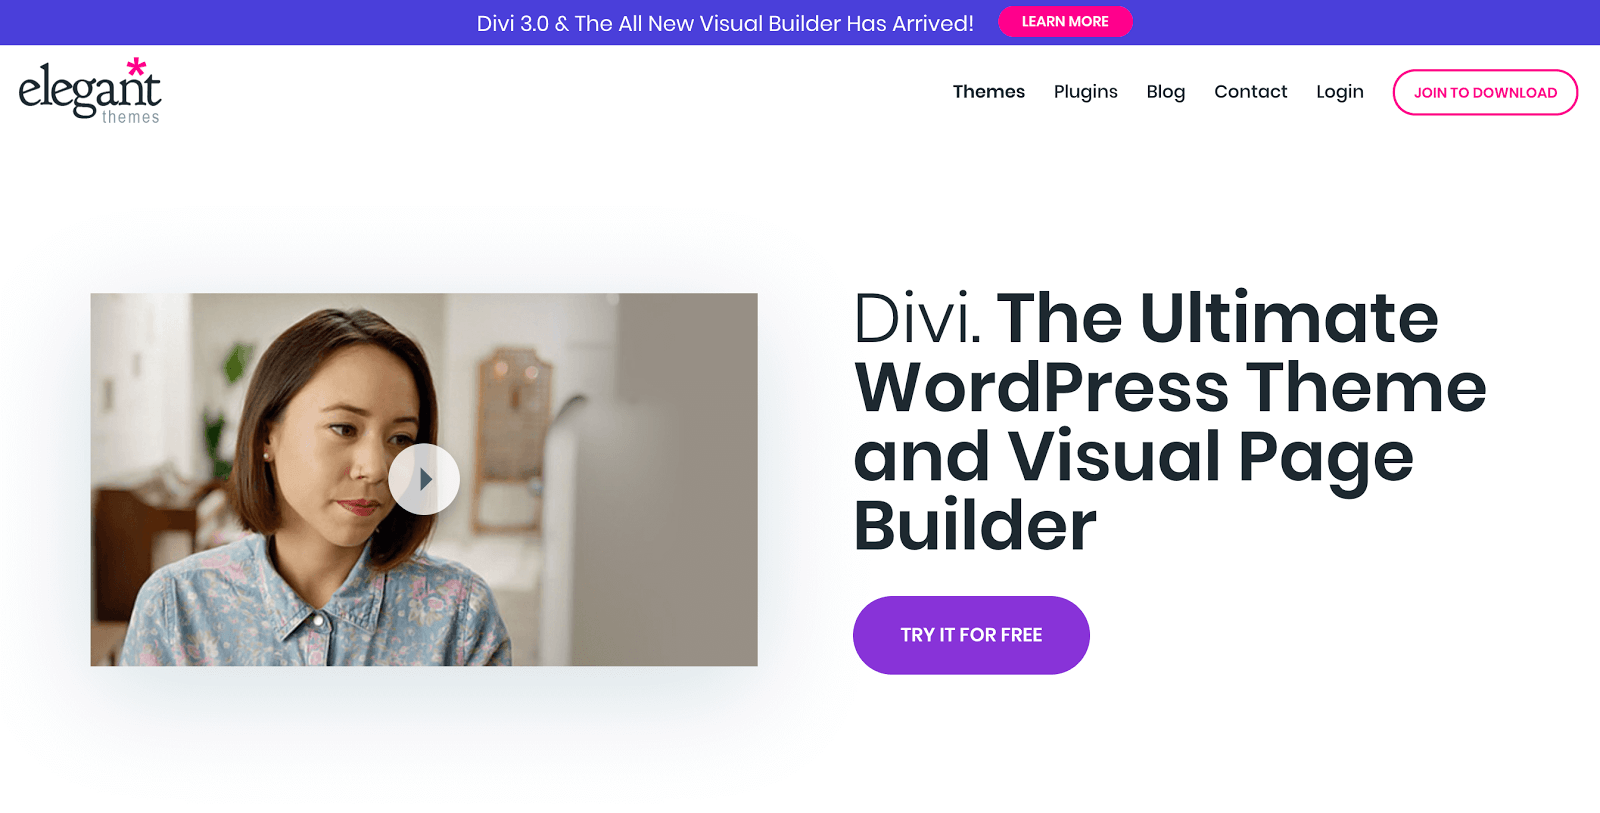 wordpress theme, divi, for mobile